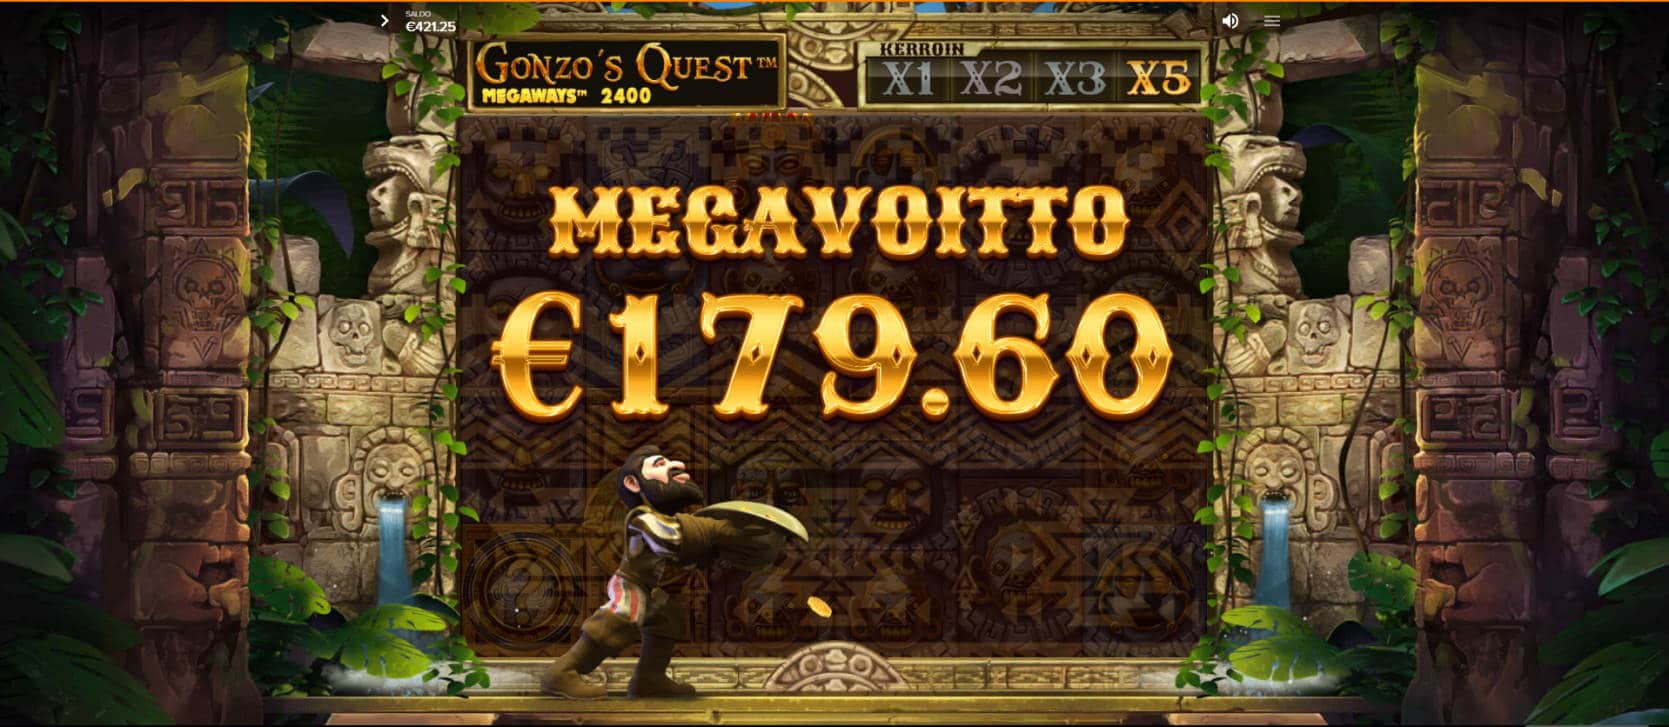 Gonzos Quest Megaways Casino win picture by Kari Grandi 24.11.2021 179.60e 180X